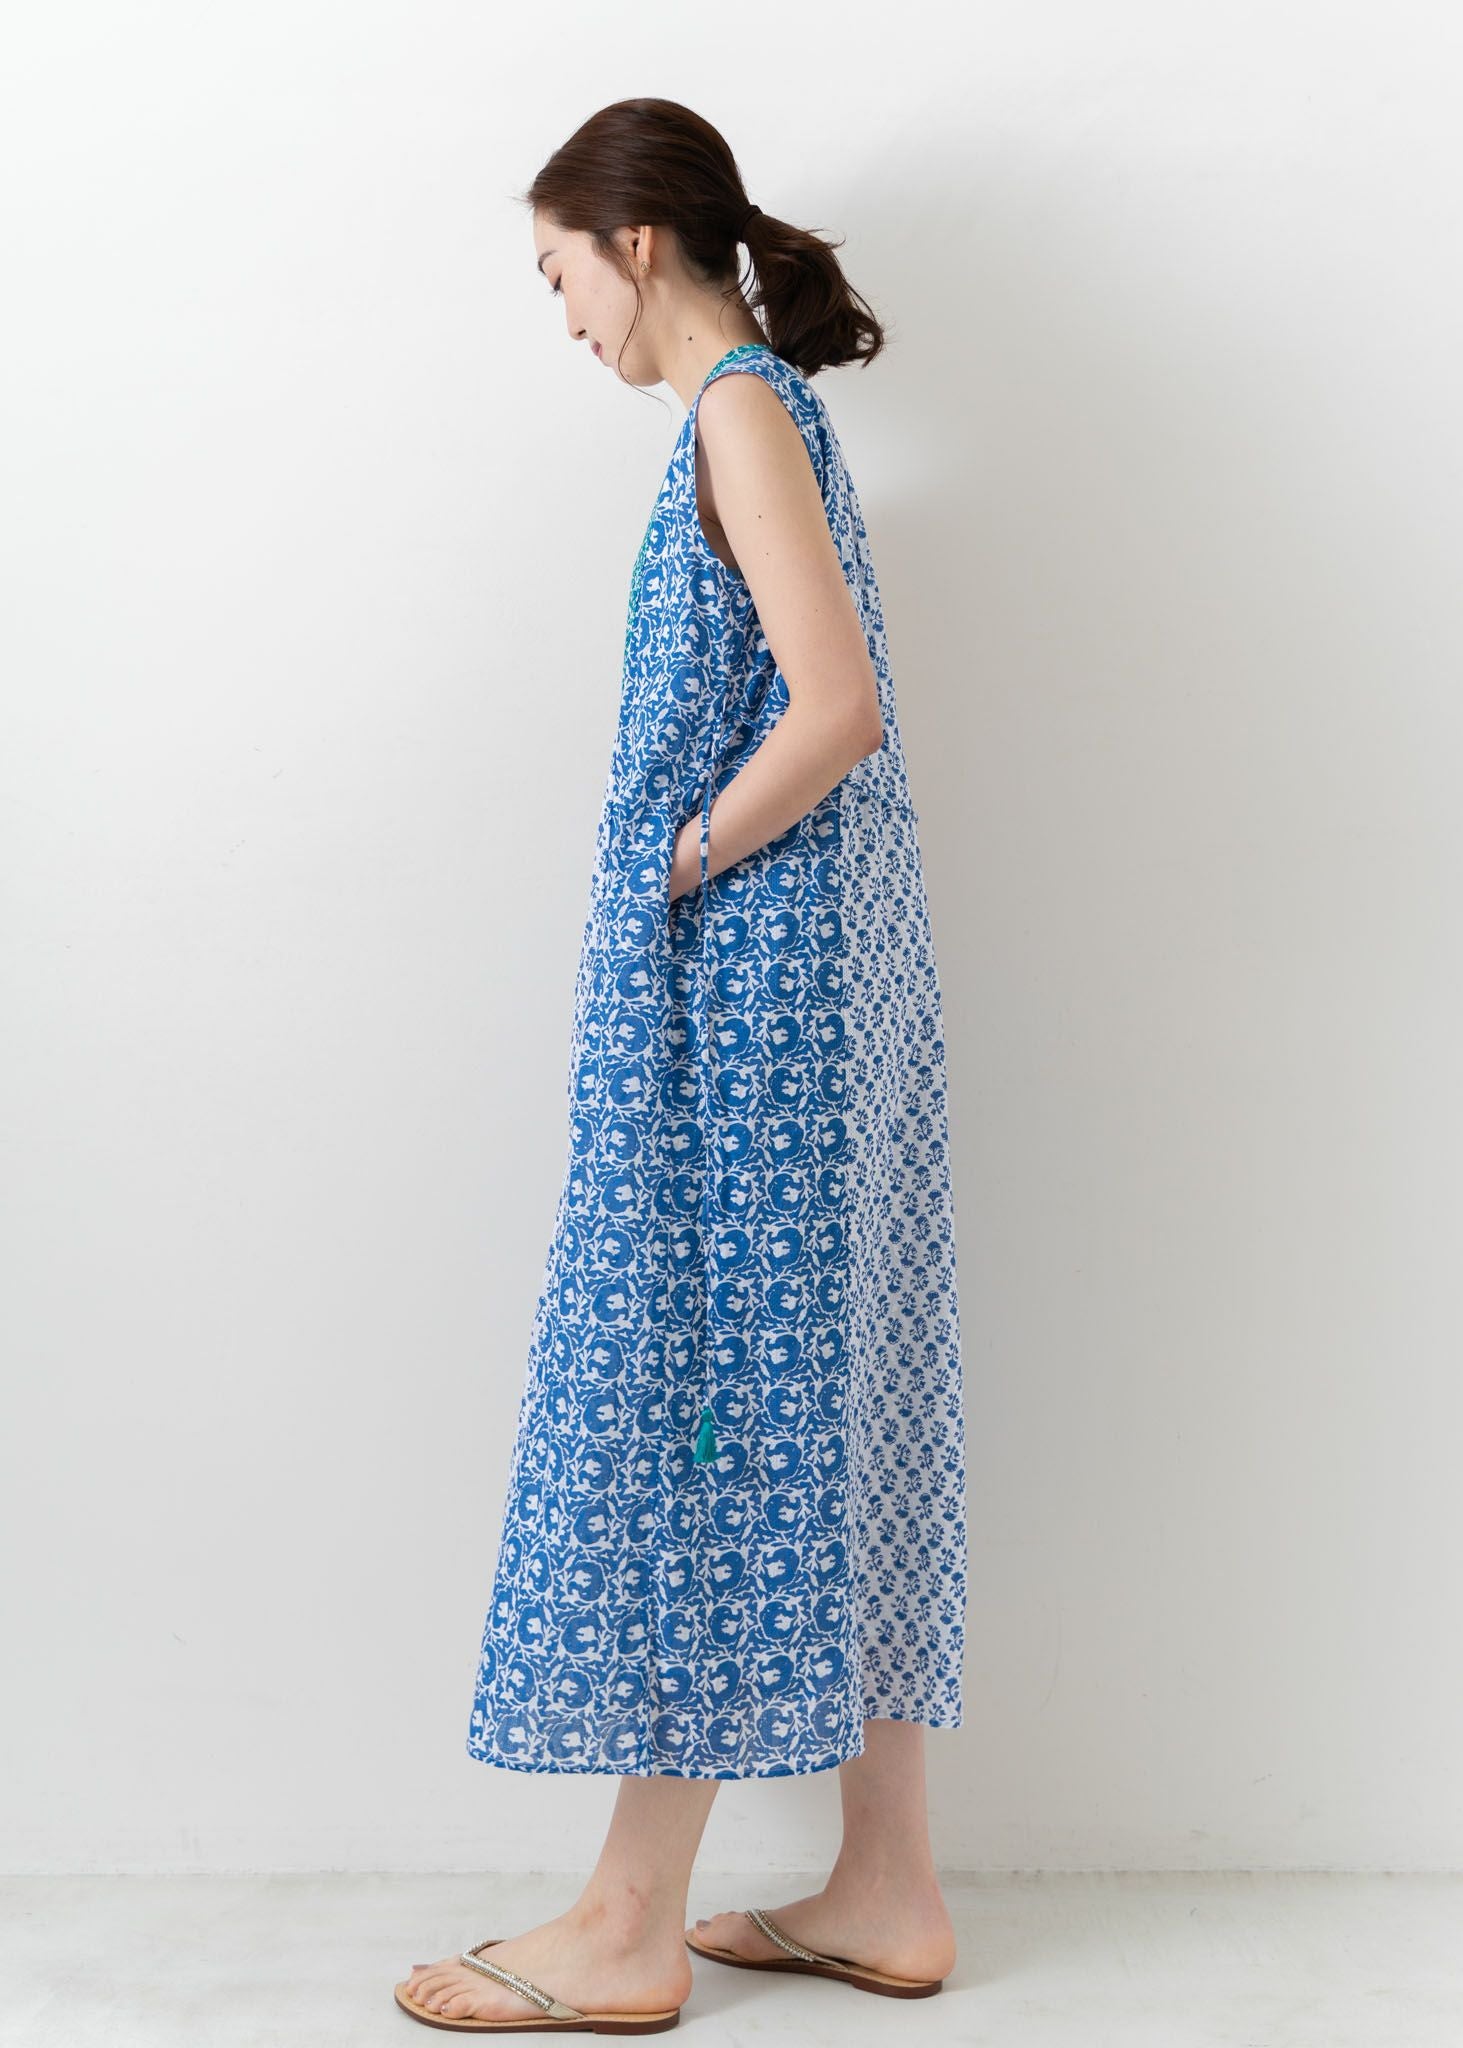 Cotton Jacquard Combi Print Embroidery Dress